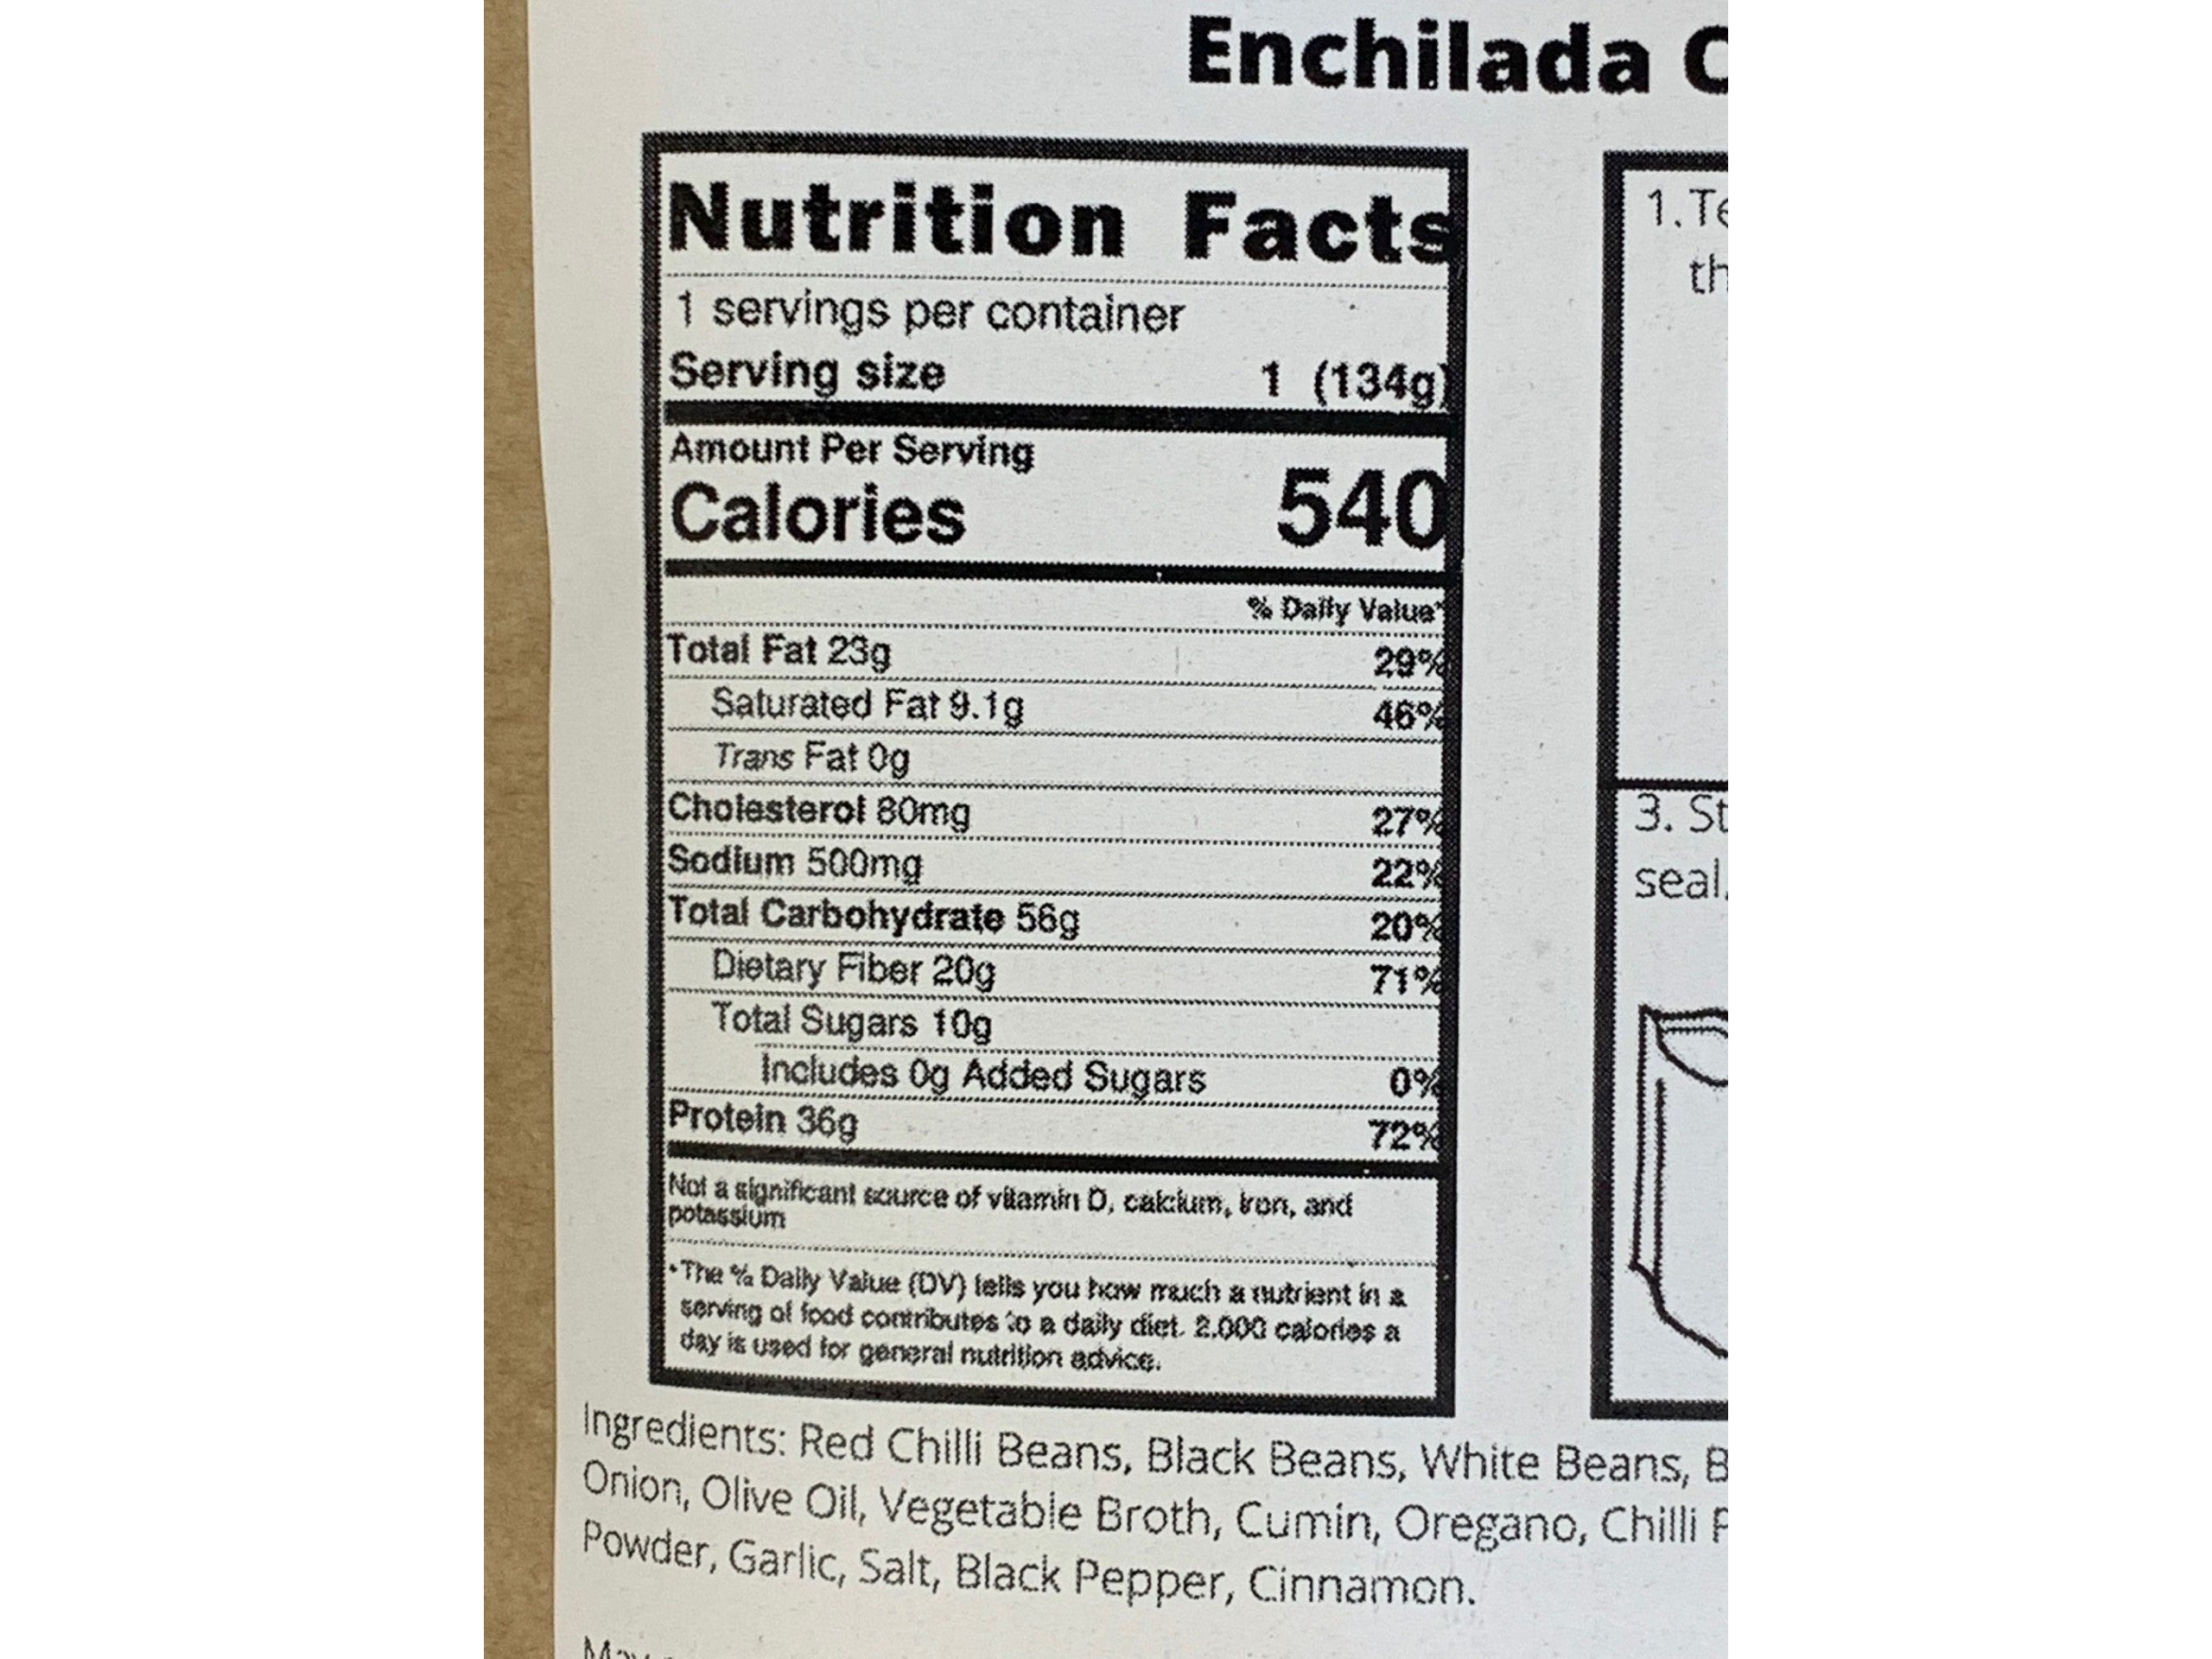 Enchilada Chili Small (134gms/540cals)